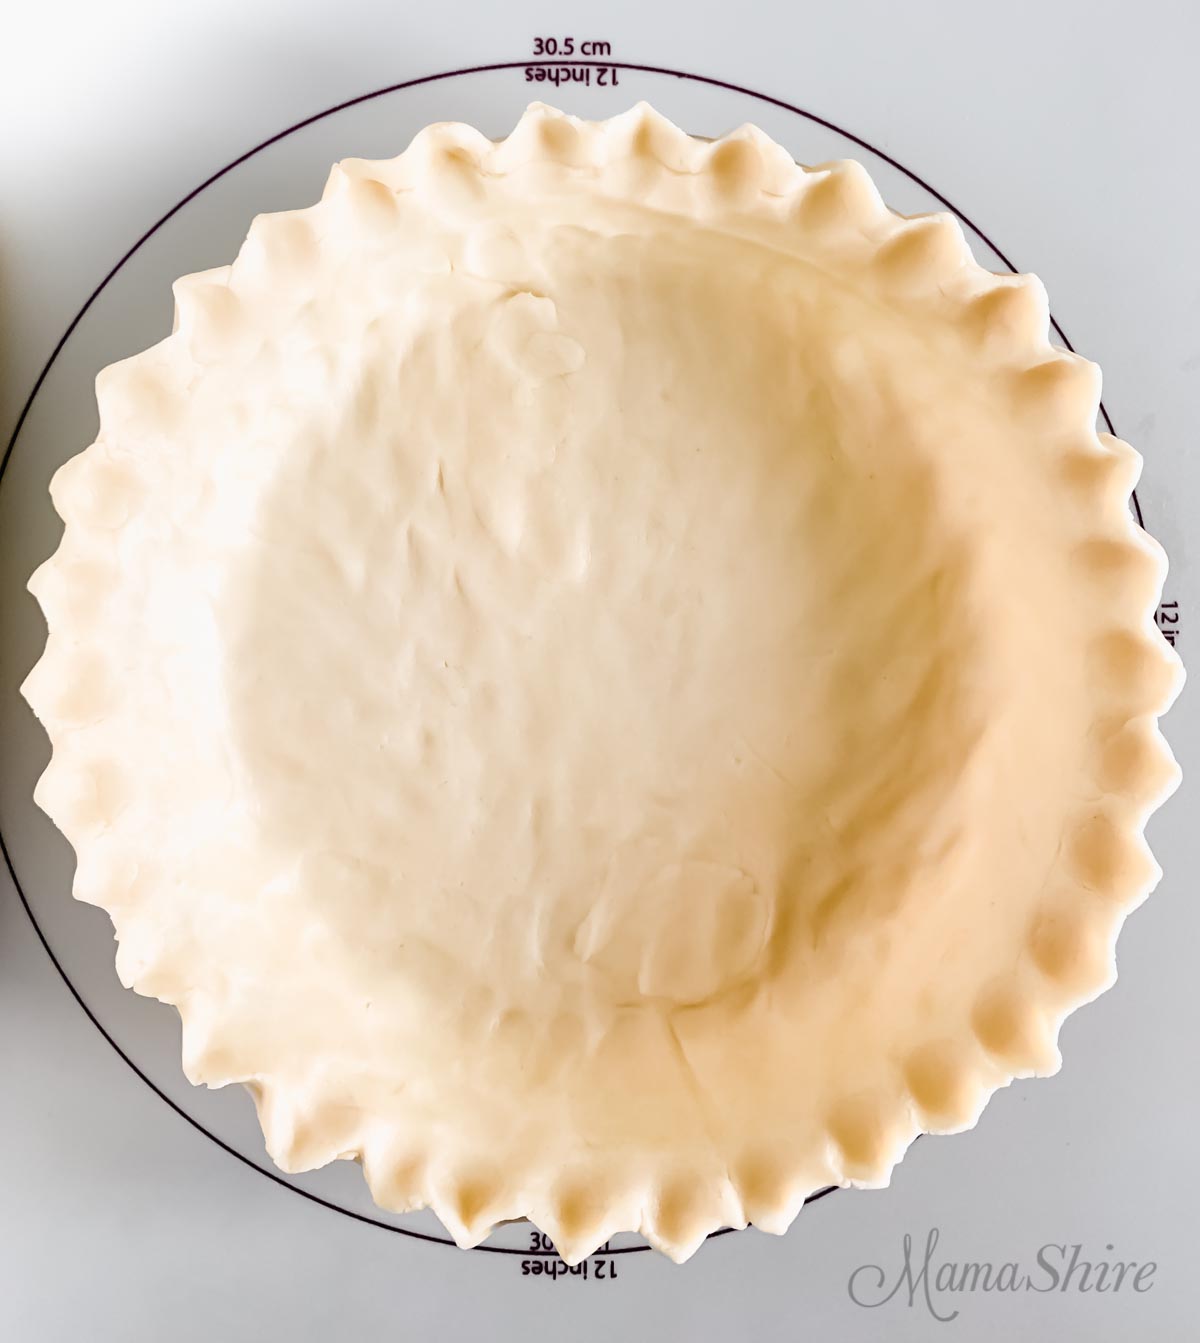 Gluten-free pie crust in a pie pan.